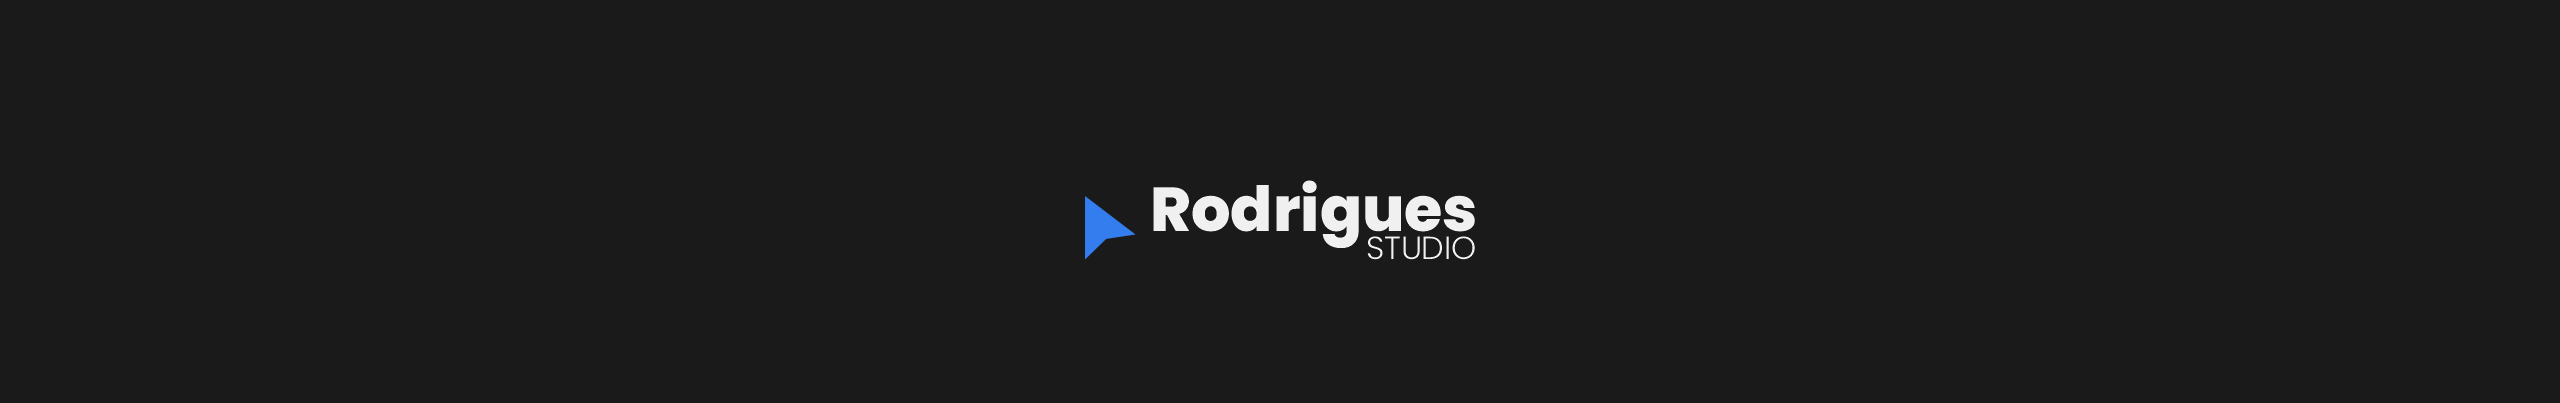 Leonardo Rodrigues's profile banner